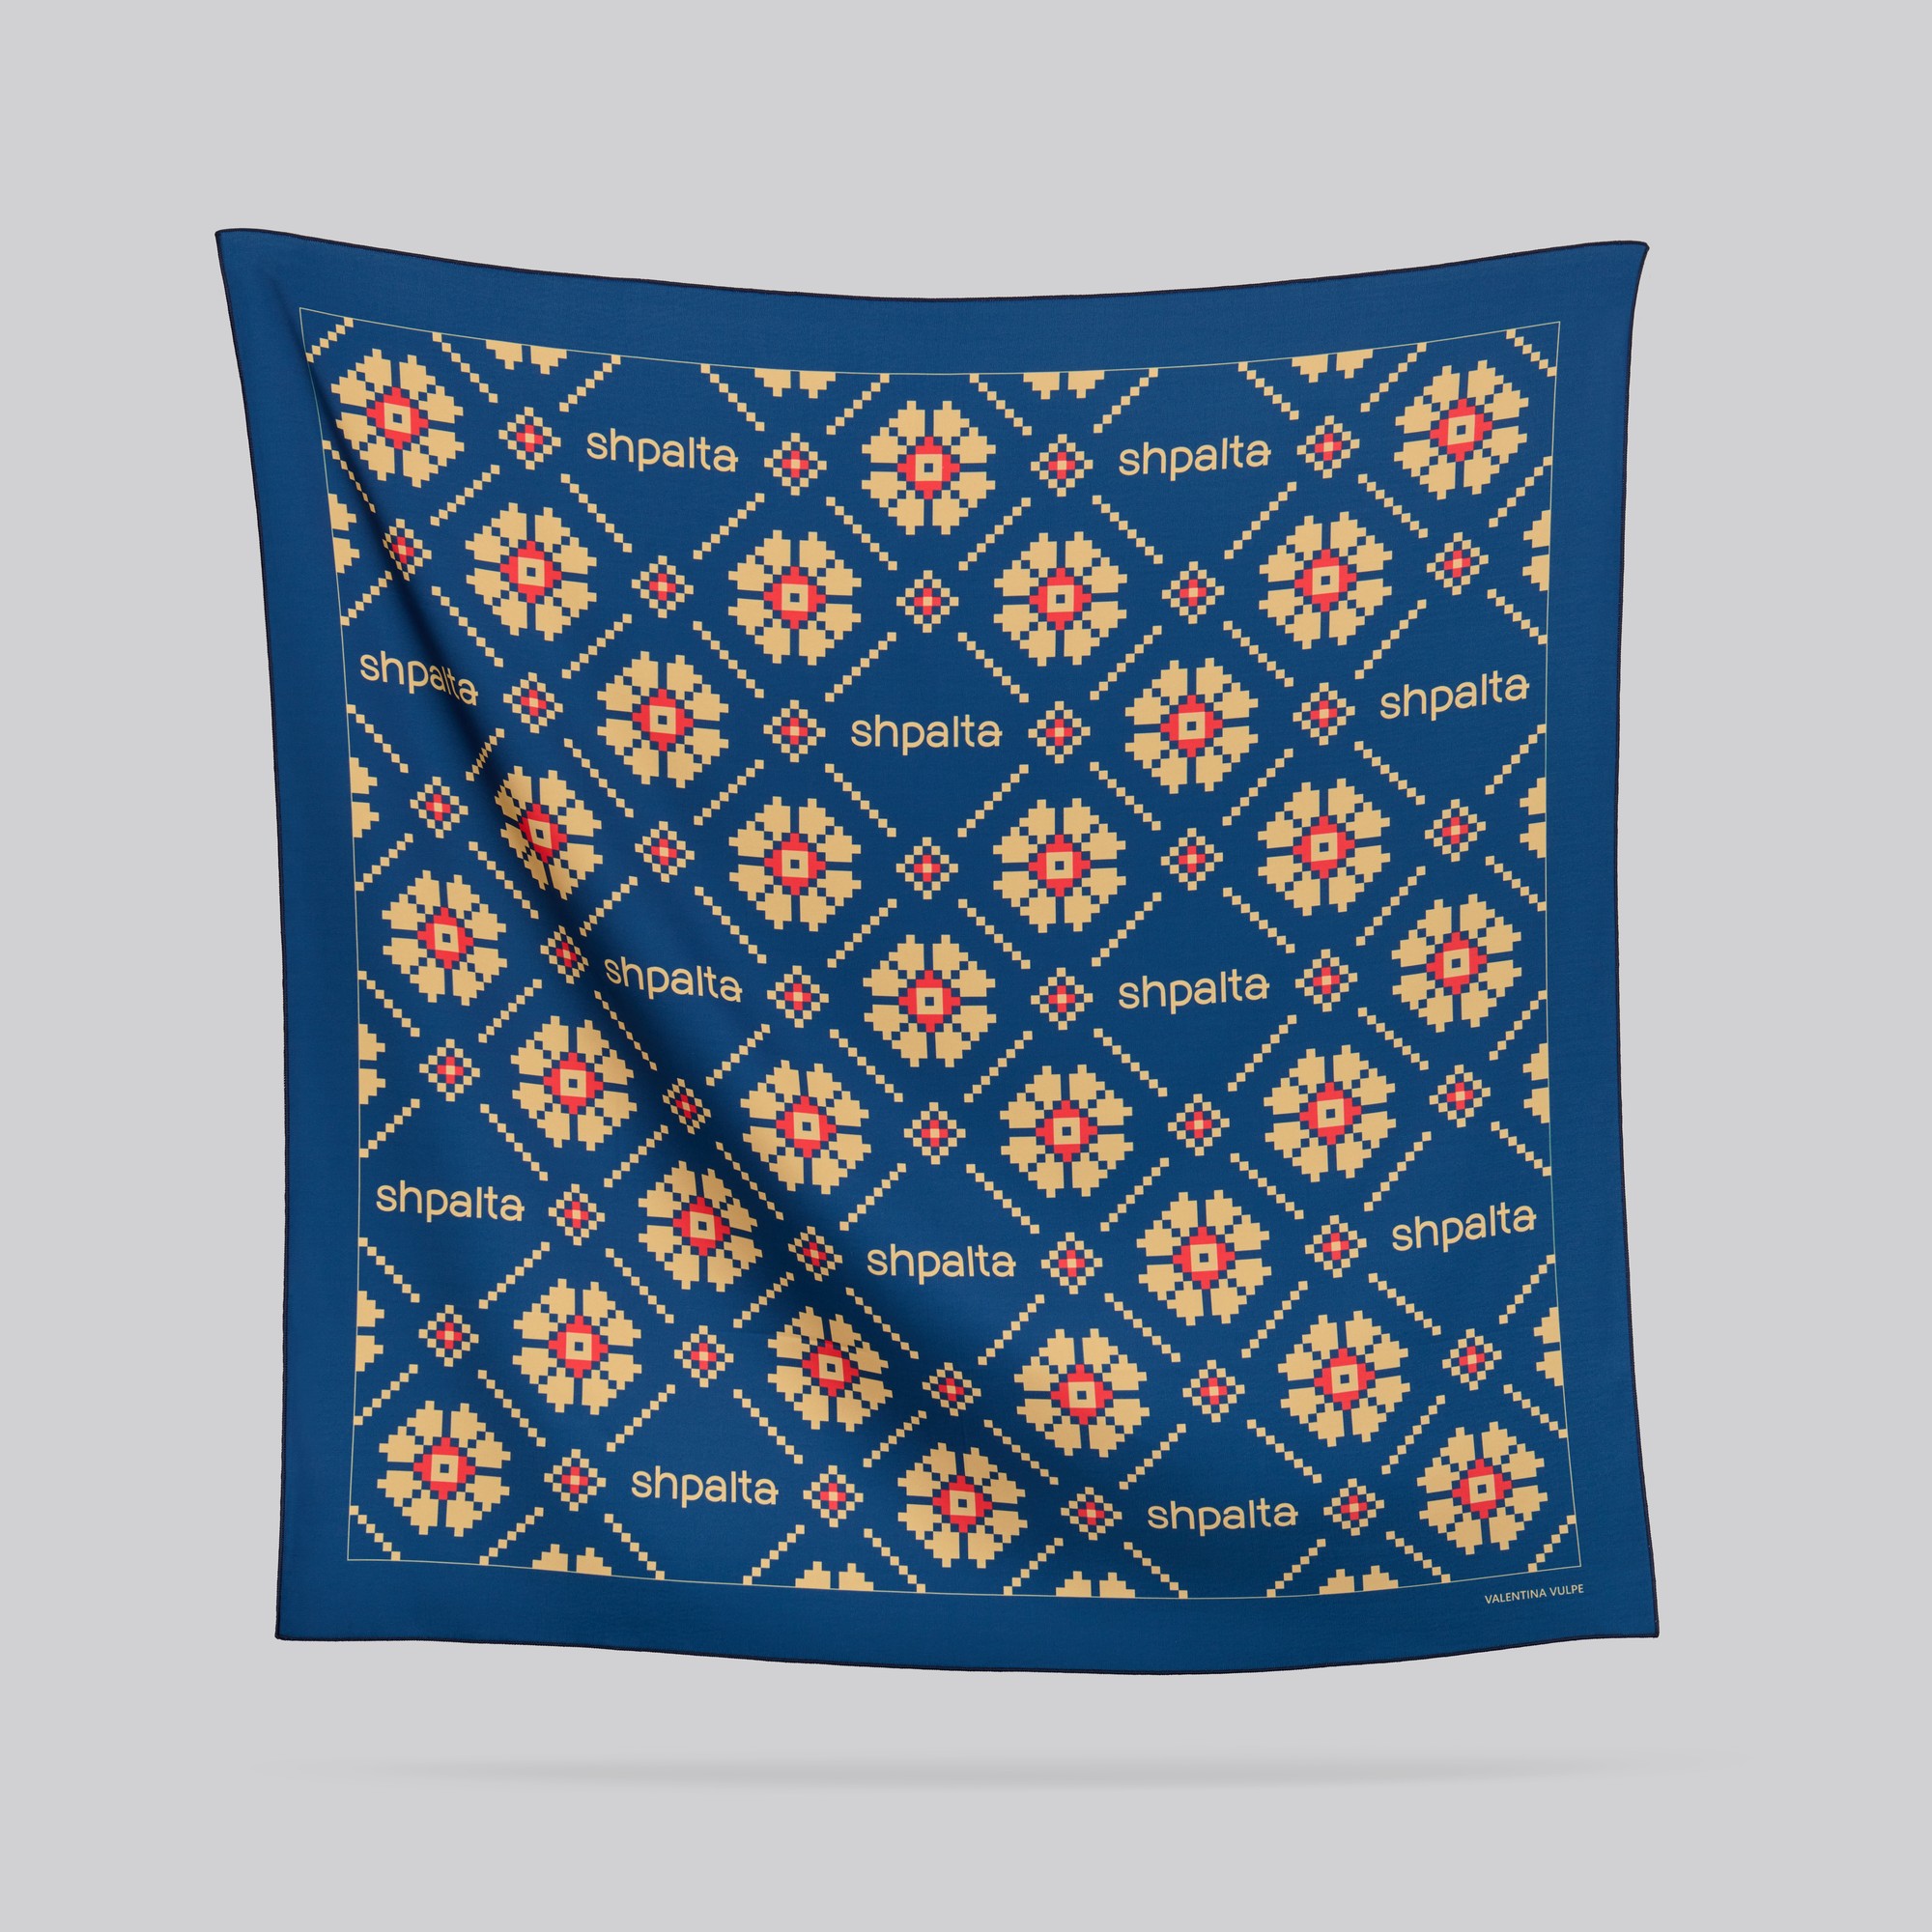 Scarf "Shpalta" Size 85*85 cm silk shawl from Ukraine